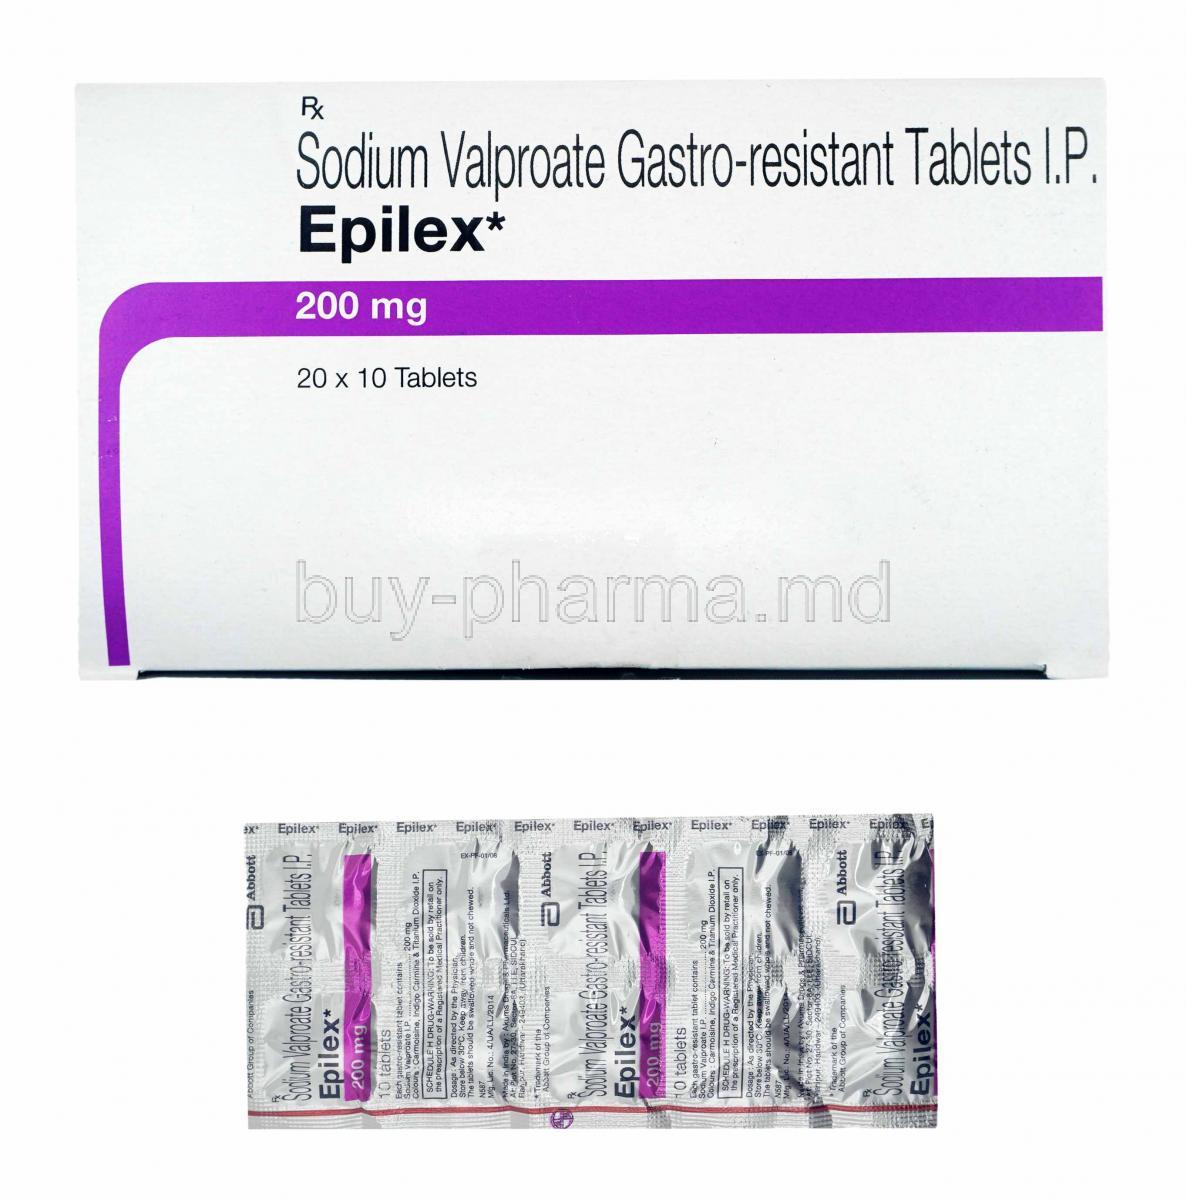 Epilex, Sodium Valproate 200mg box and tablets